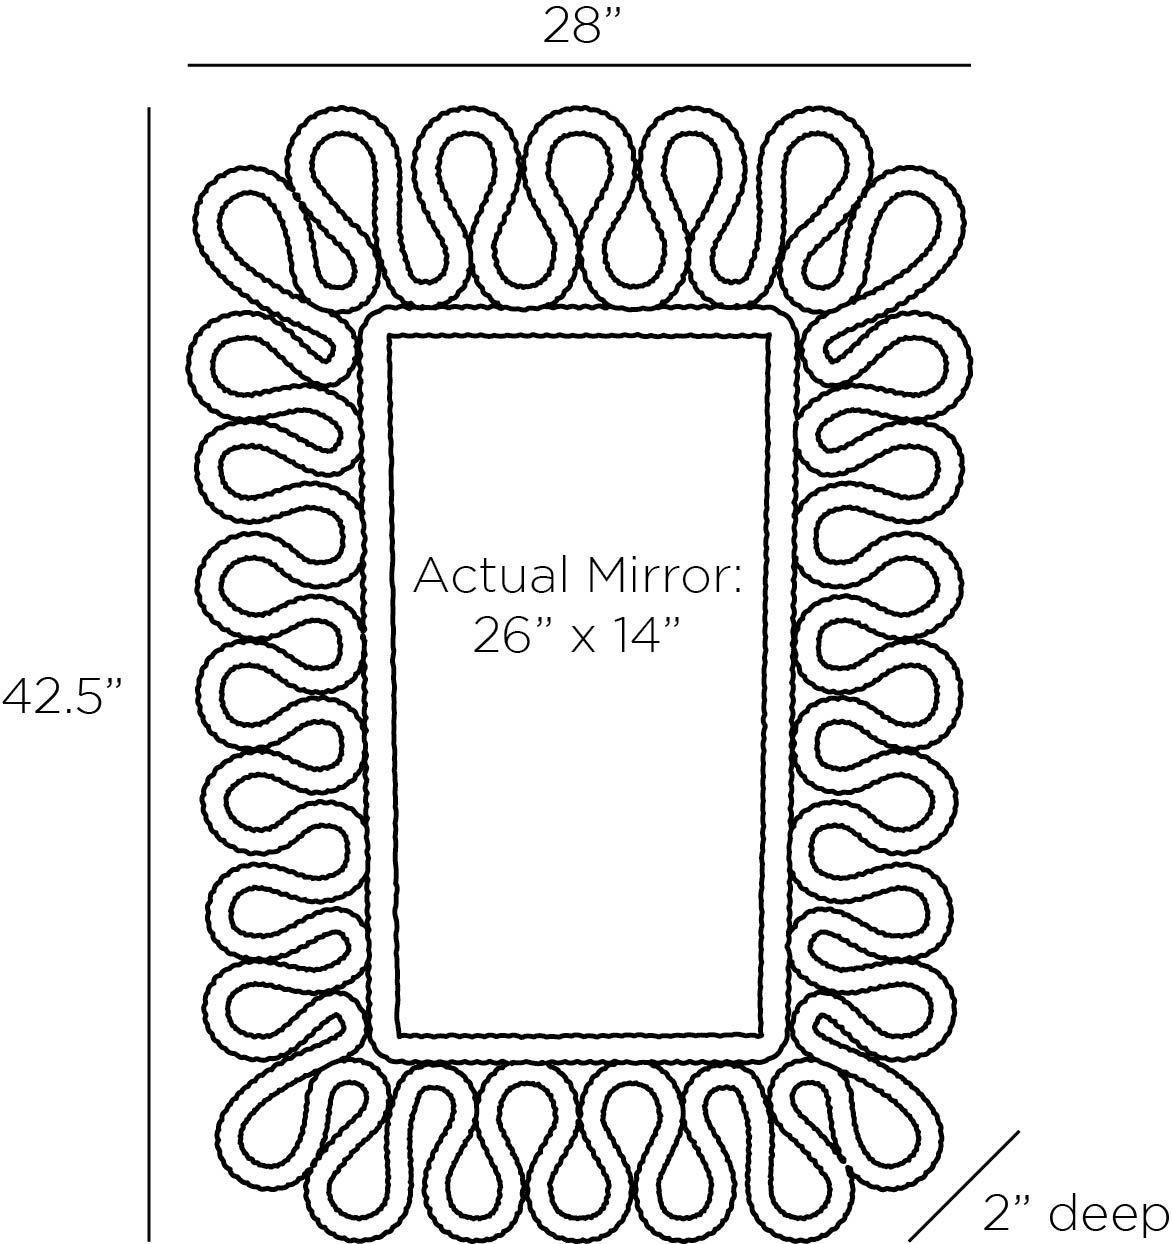 arteriors caracol mirror diagram